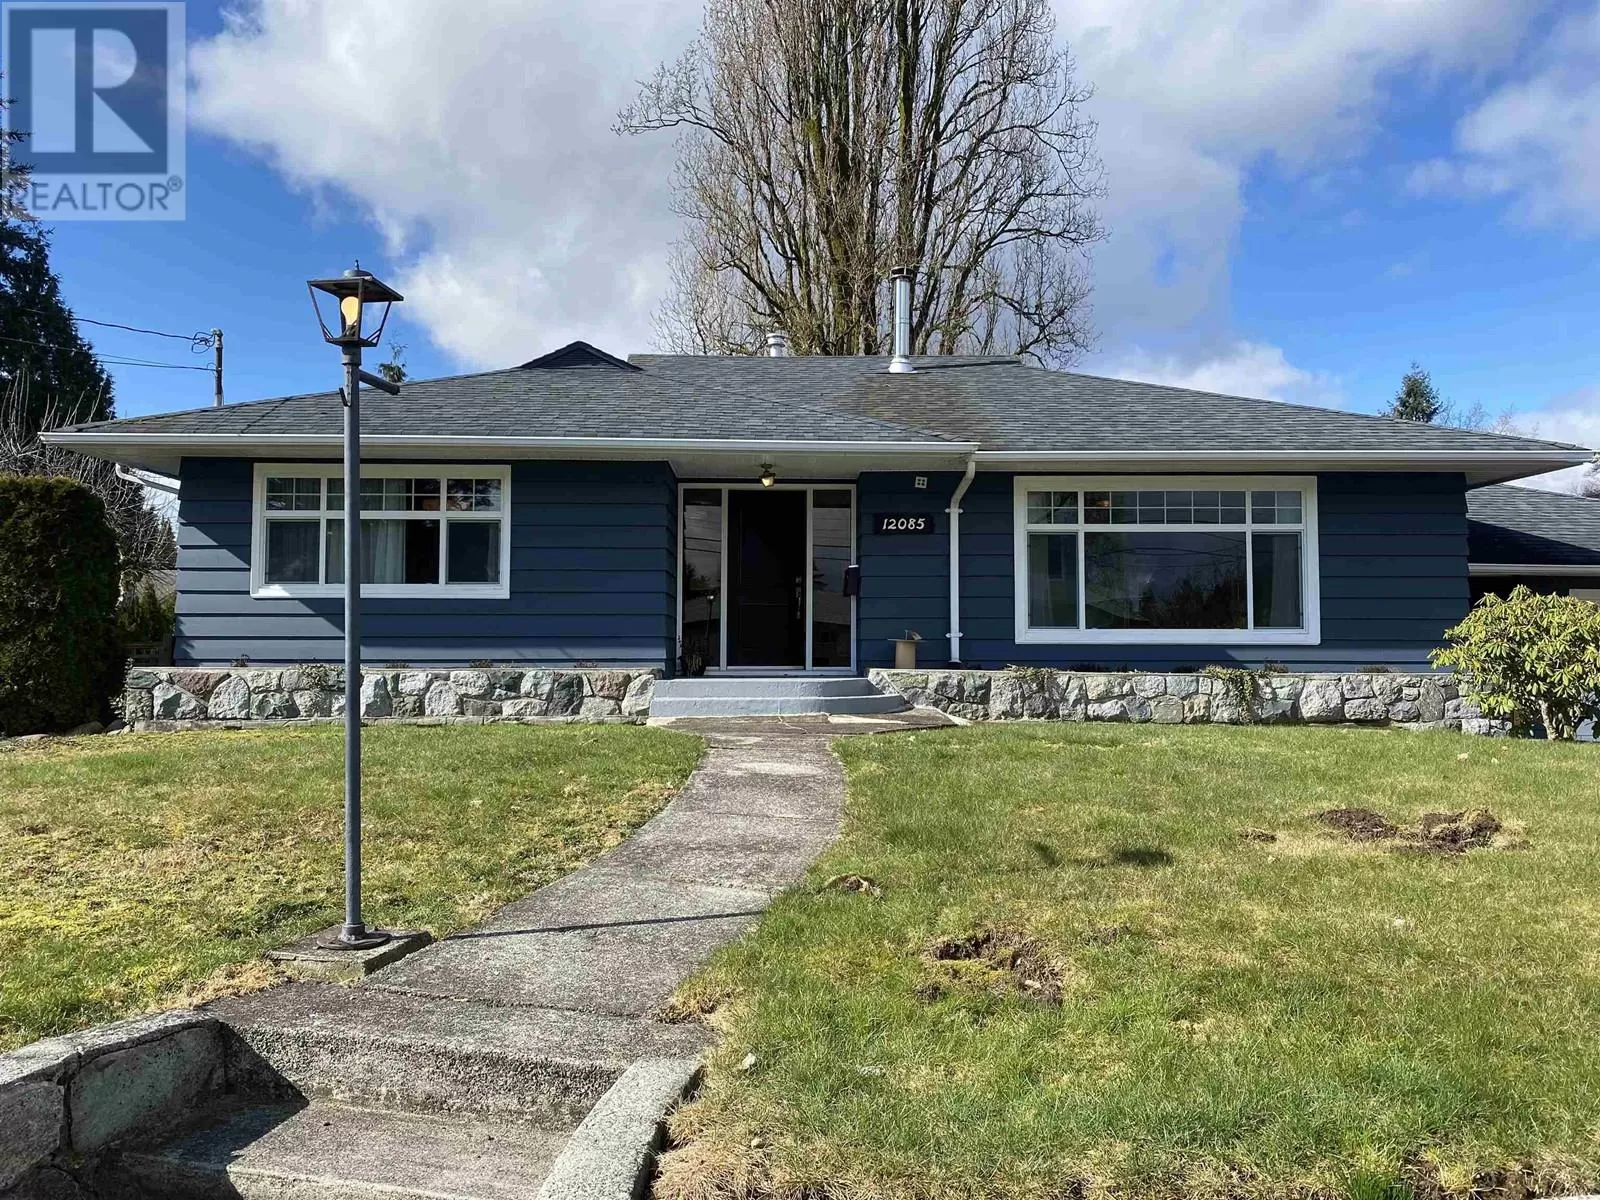 House for rent: Half Basement 12085 York Street, Maple Ridge, British Columbia V2X 5S1